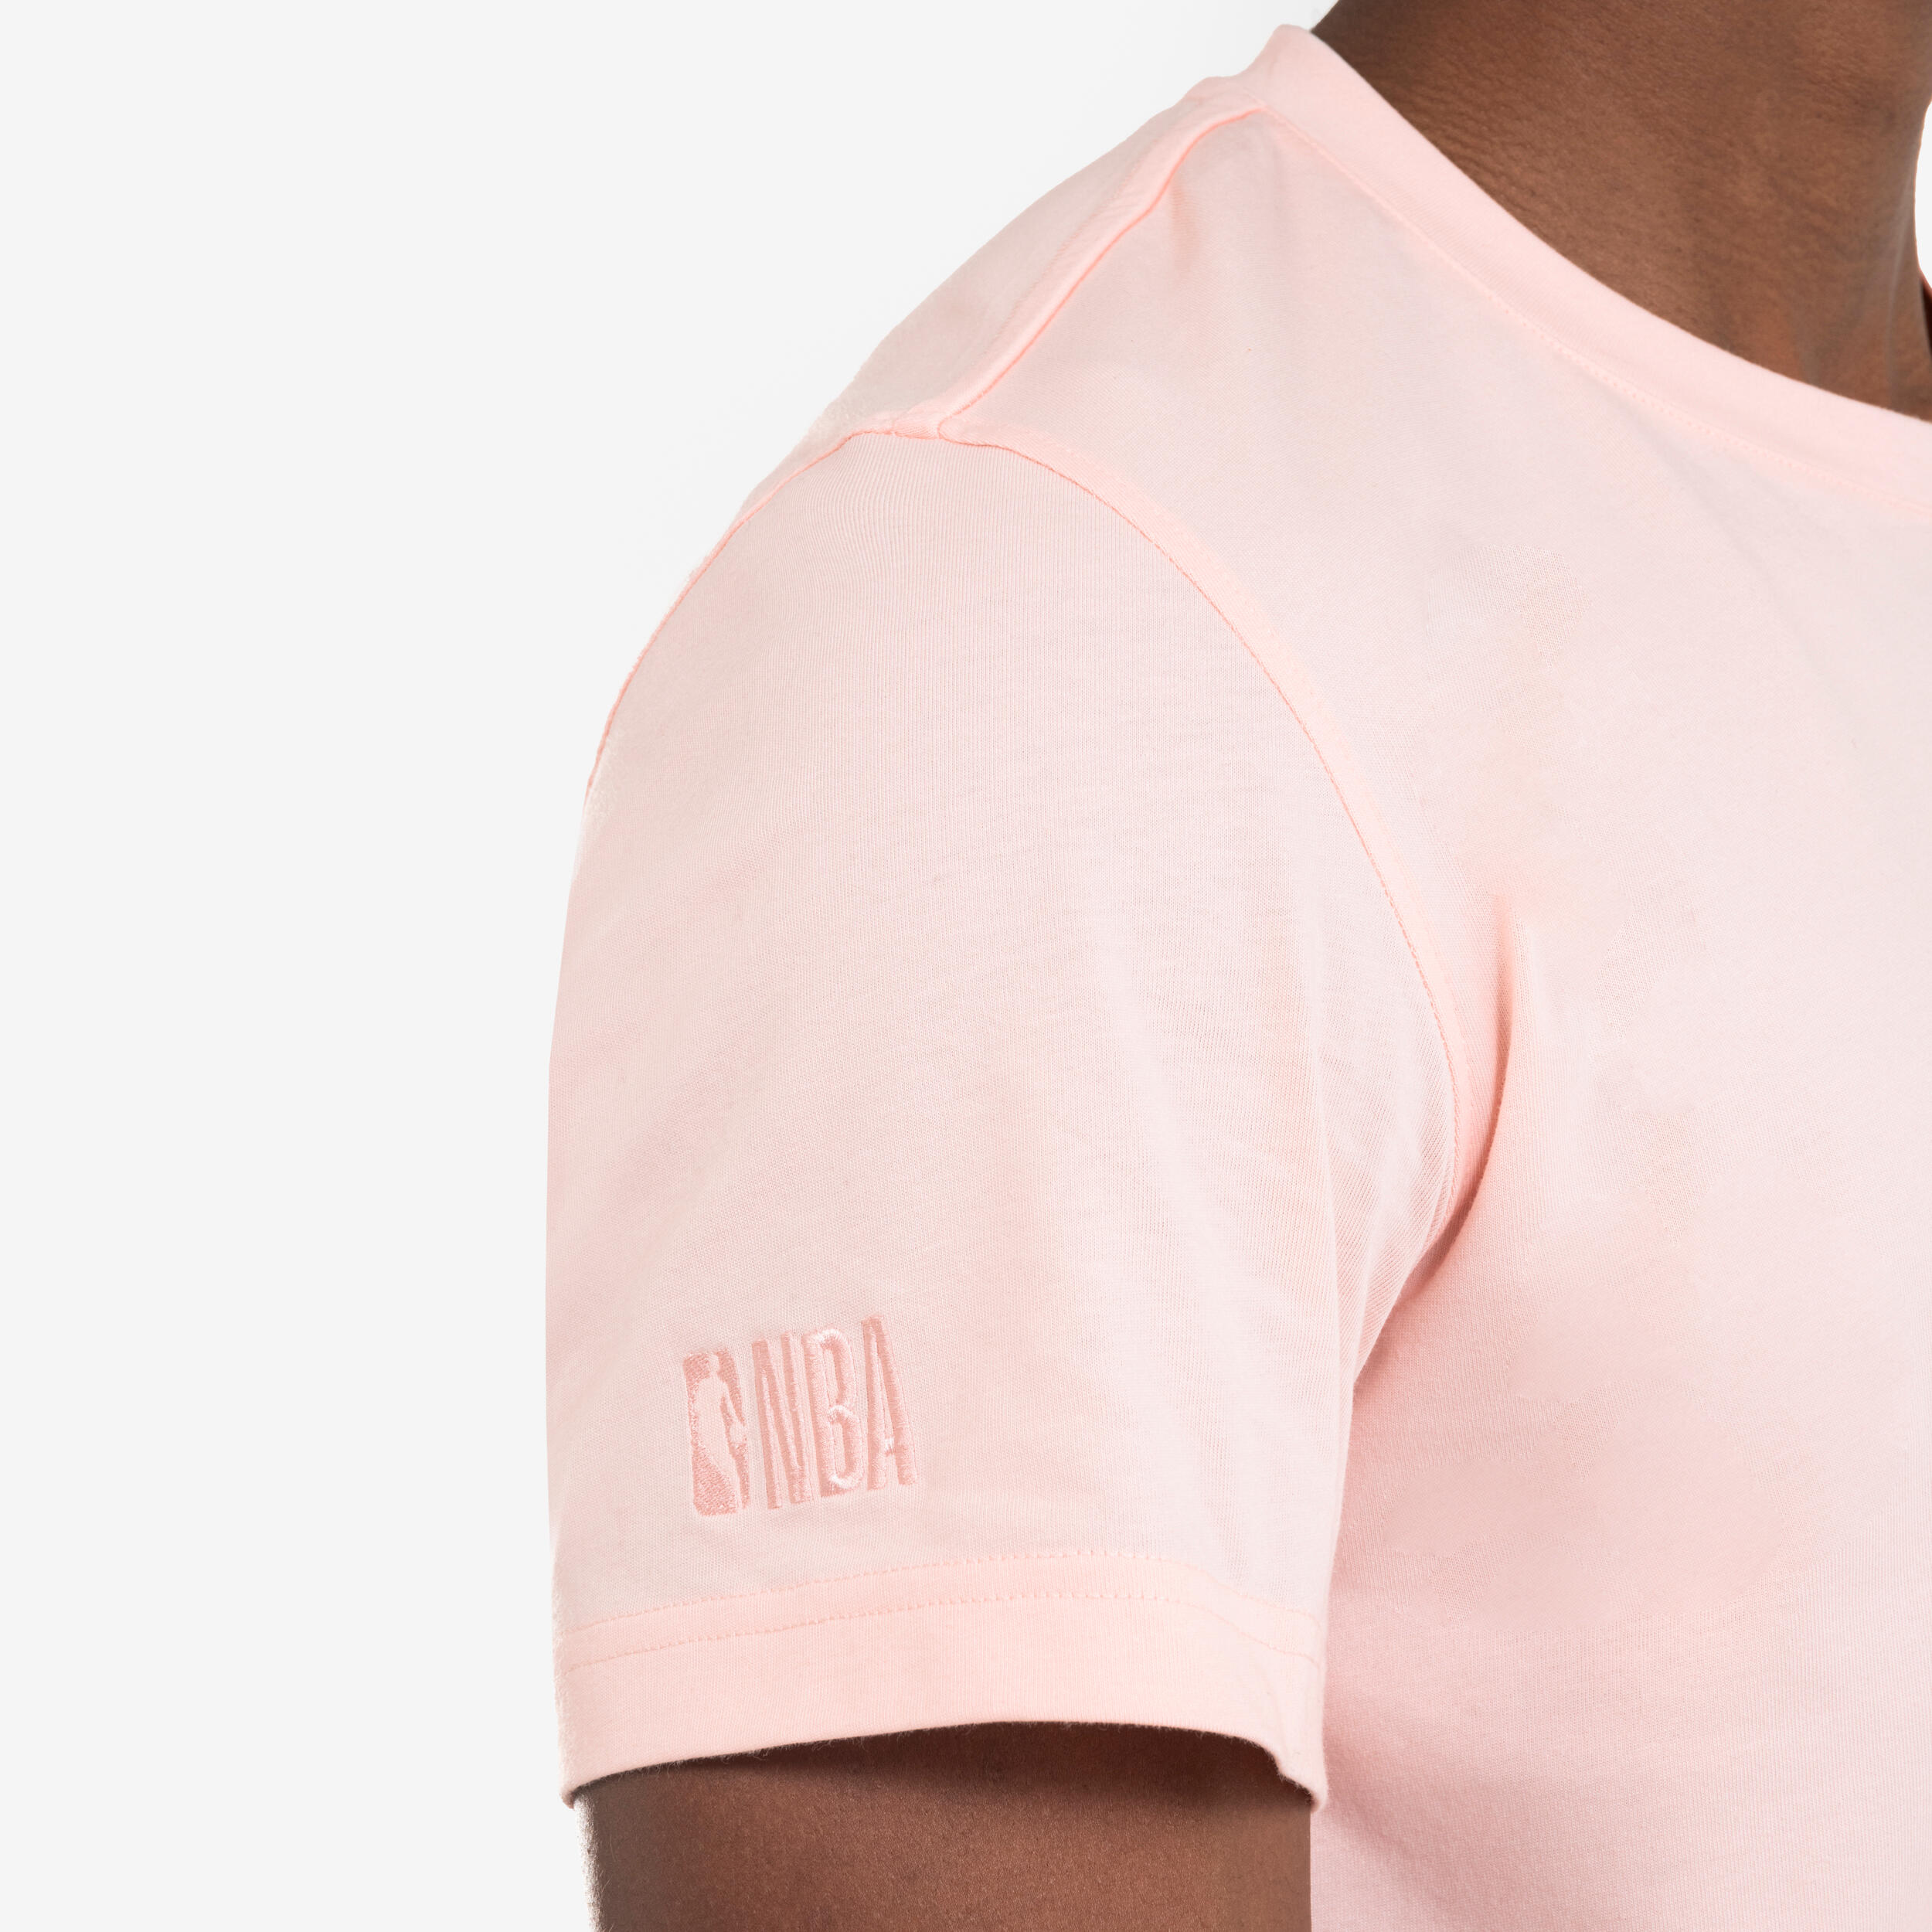 Unisex Basketball T-Shirt 900 AD - NBA Heat/Pink 6/6